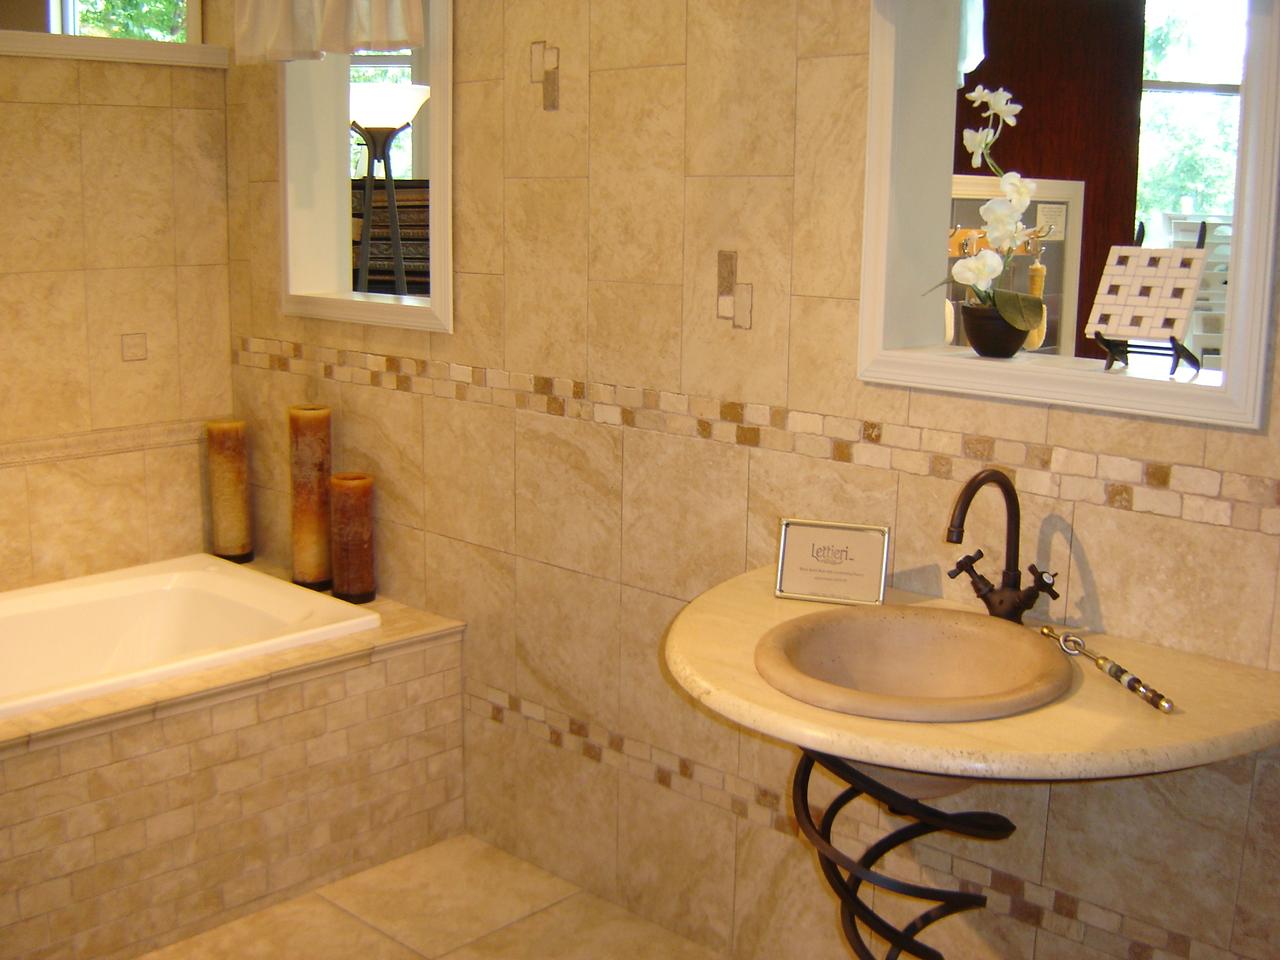 Rustic bathroom tile design ideas